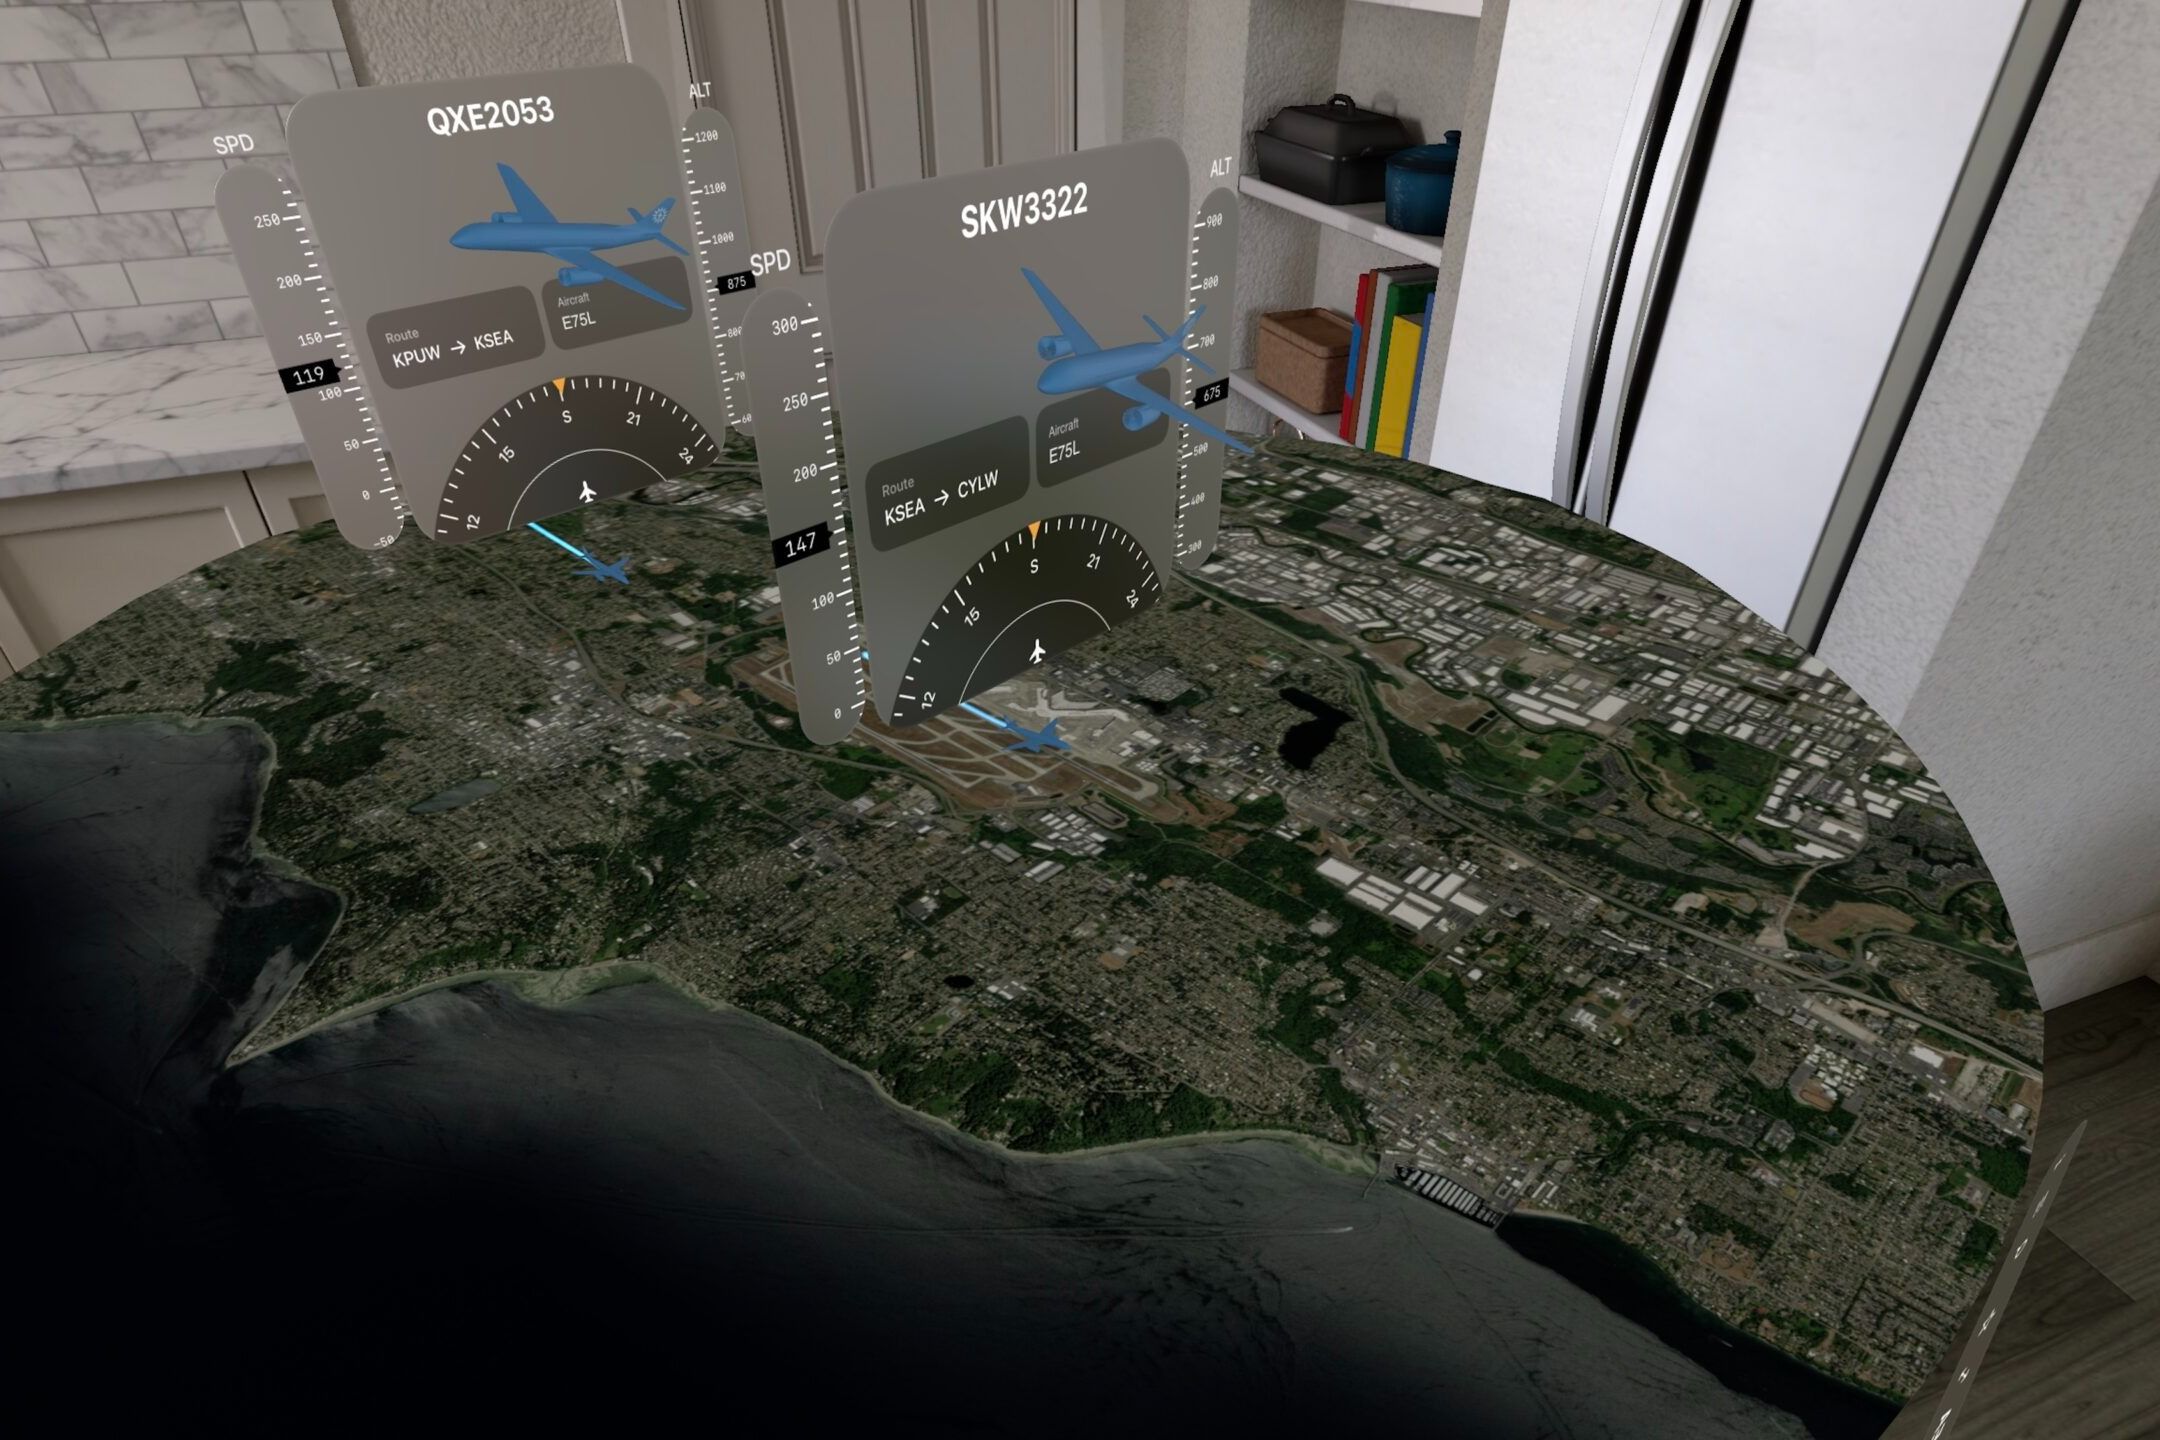 Foreflight tracking flights on Apple Vision Pro